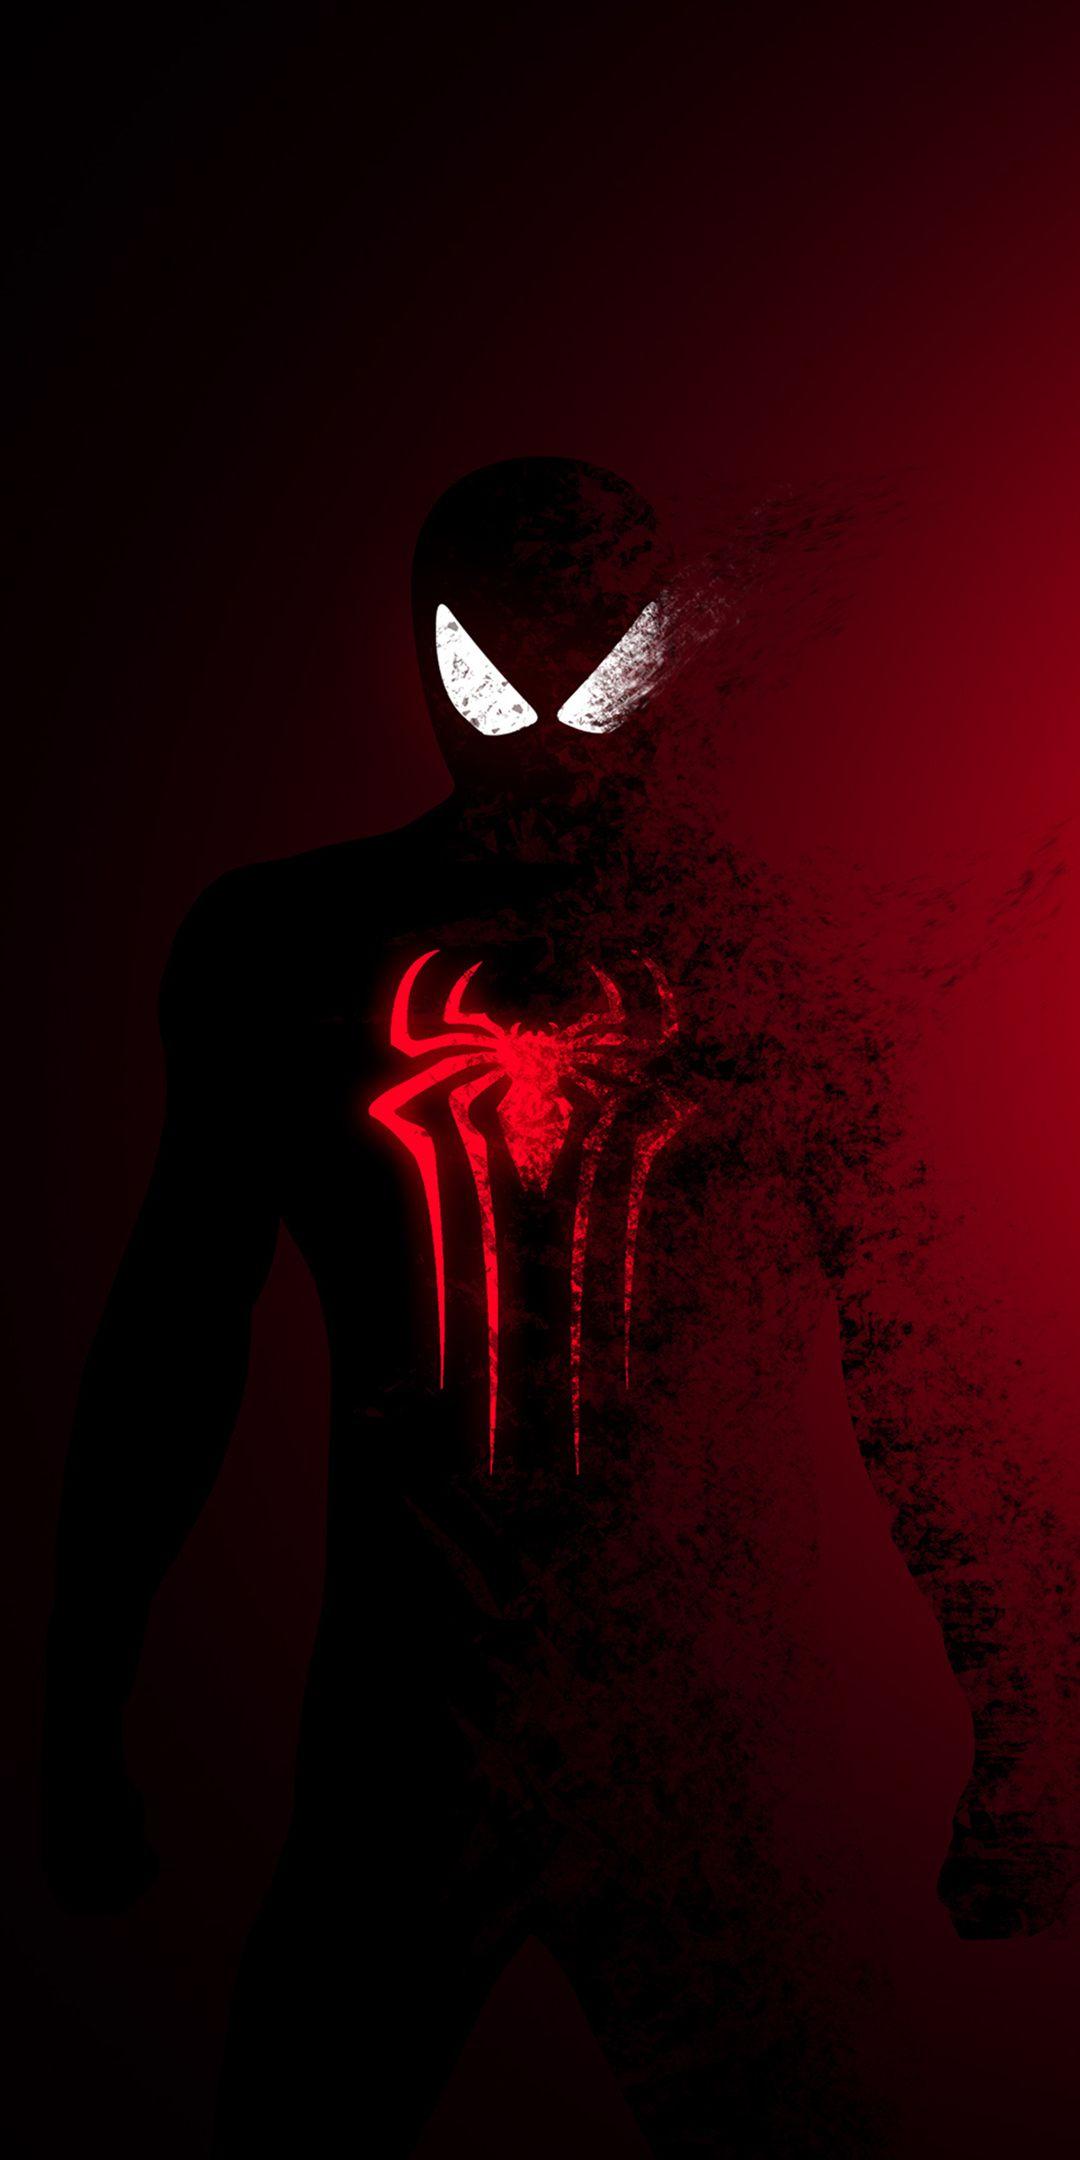 Spider Man Dark Wallpapers - Wallpaper Cave